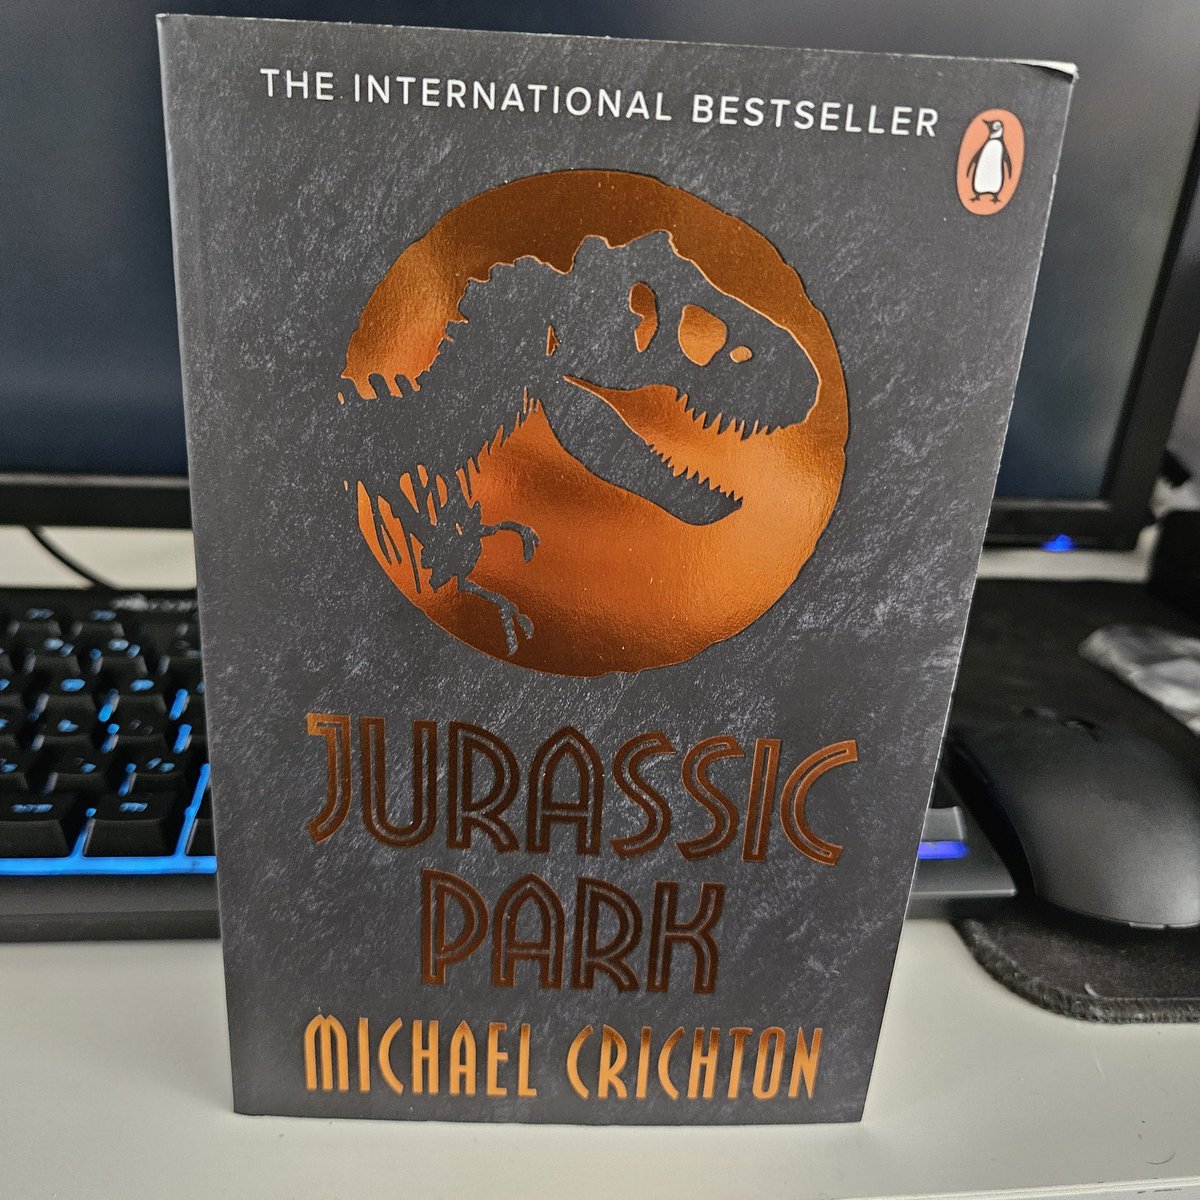 New book day.
#JurassicPark